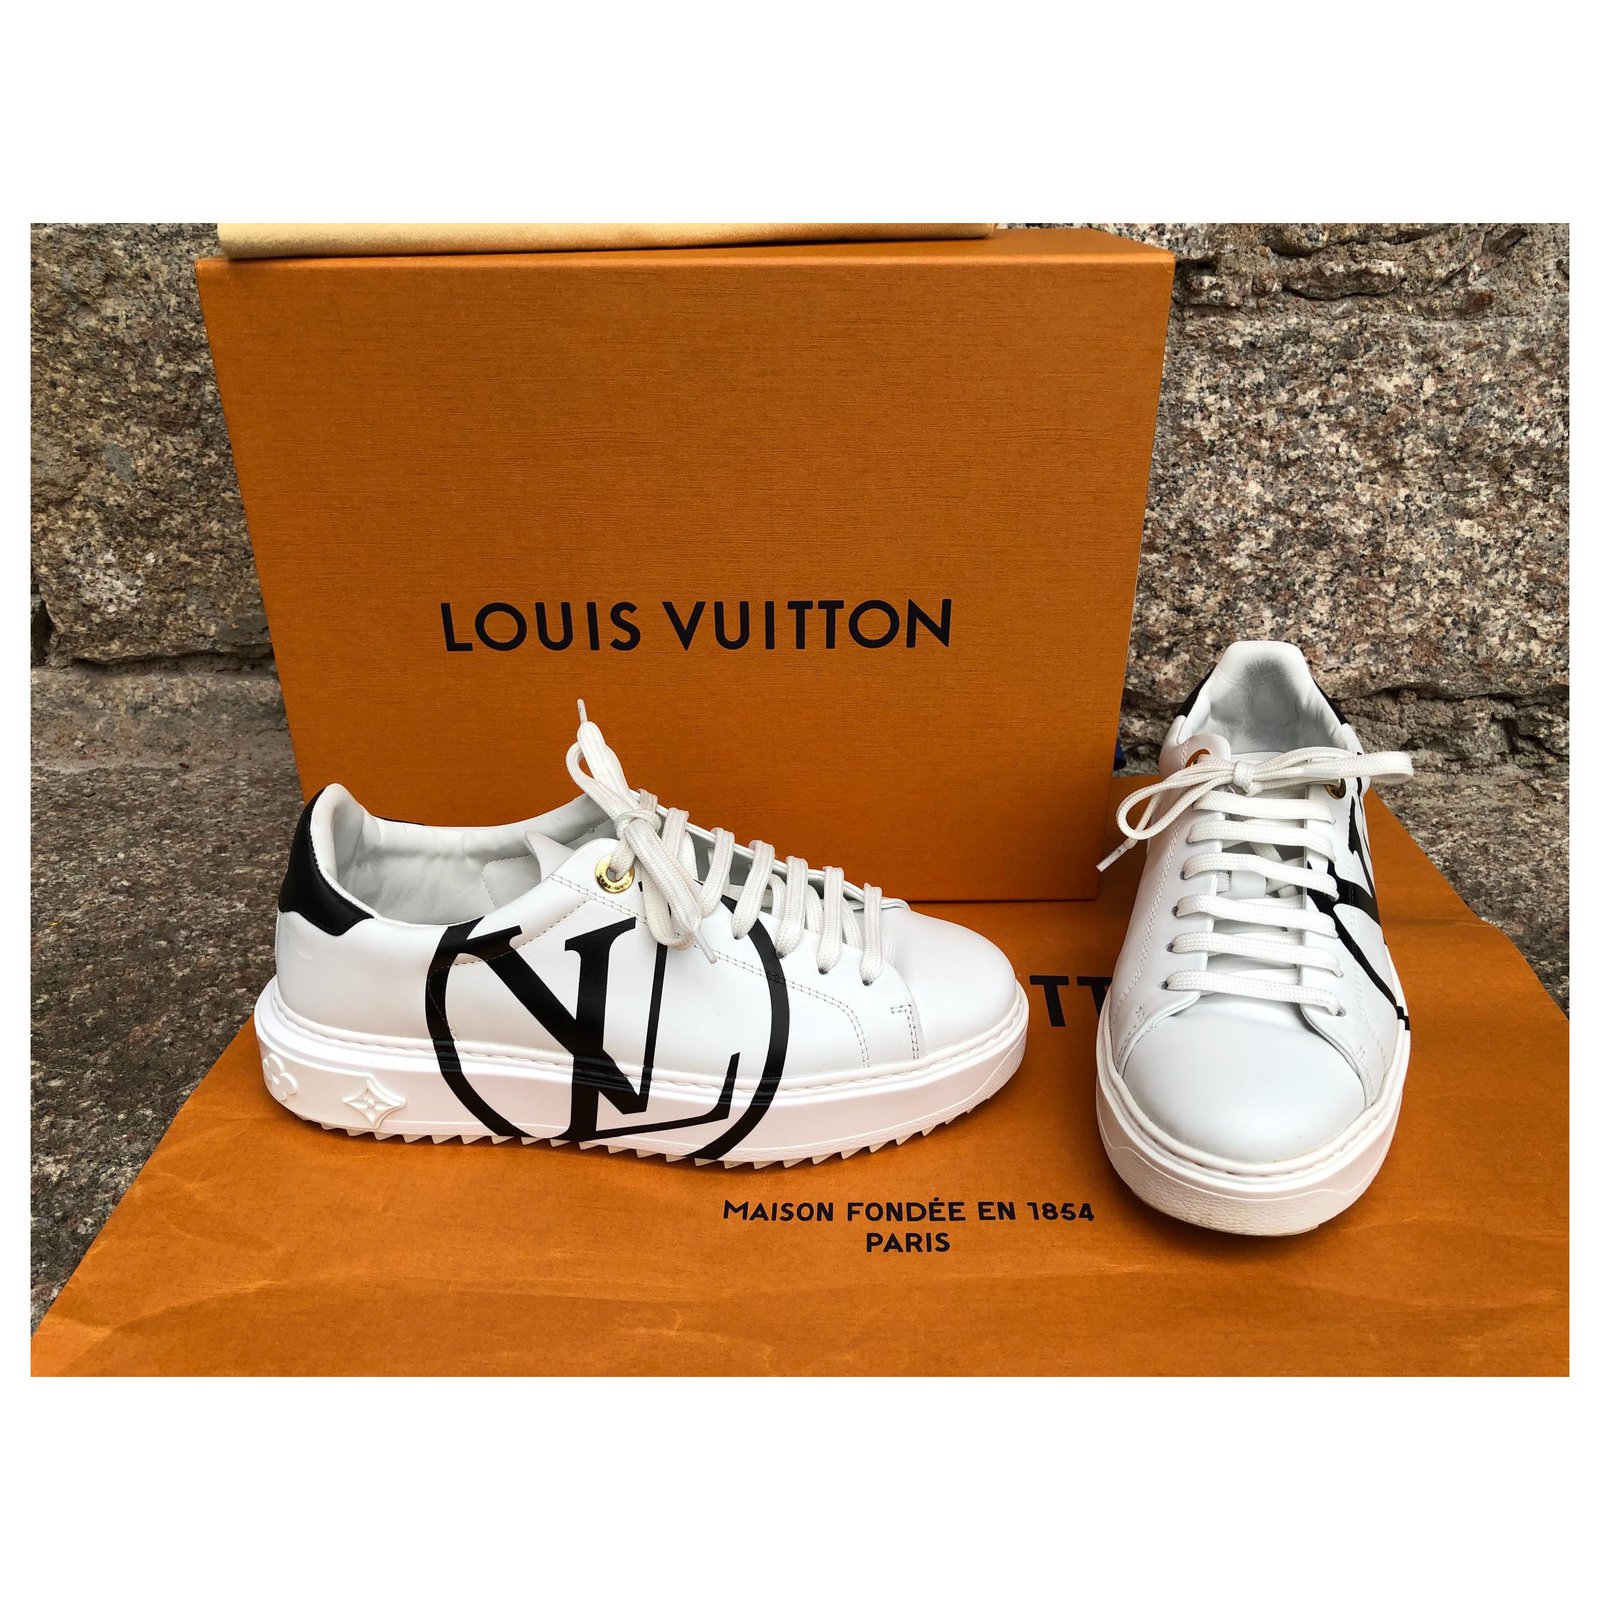 Louis vuitton time out sneaker | Louis Vuitton sneakers (Time out sneaker) replica. 2020-05-08